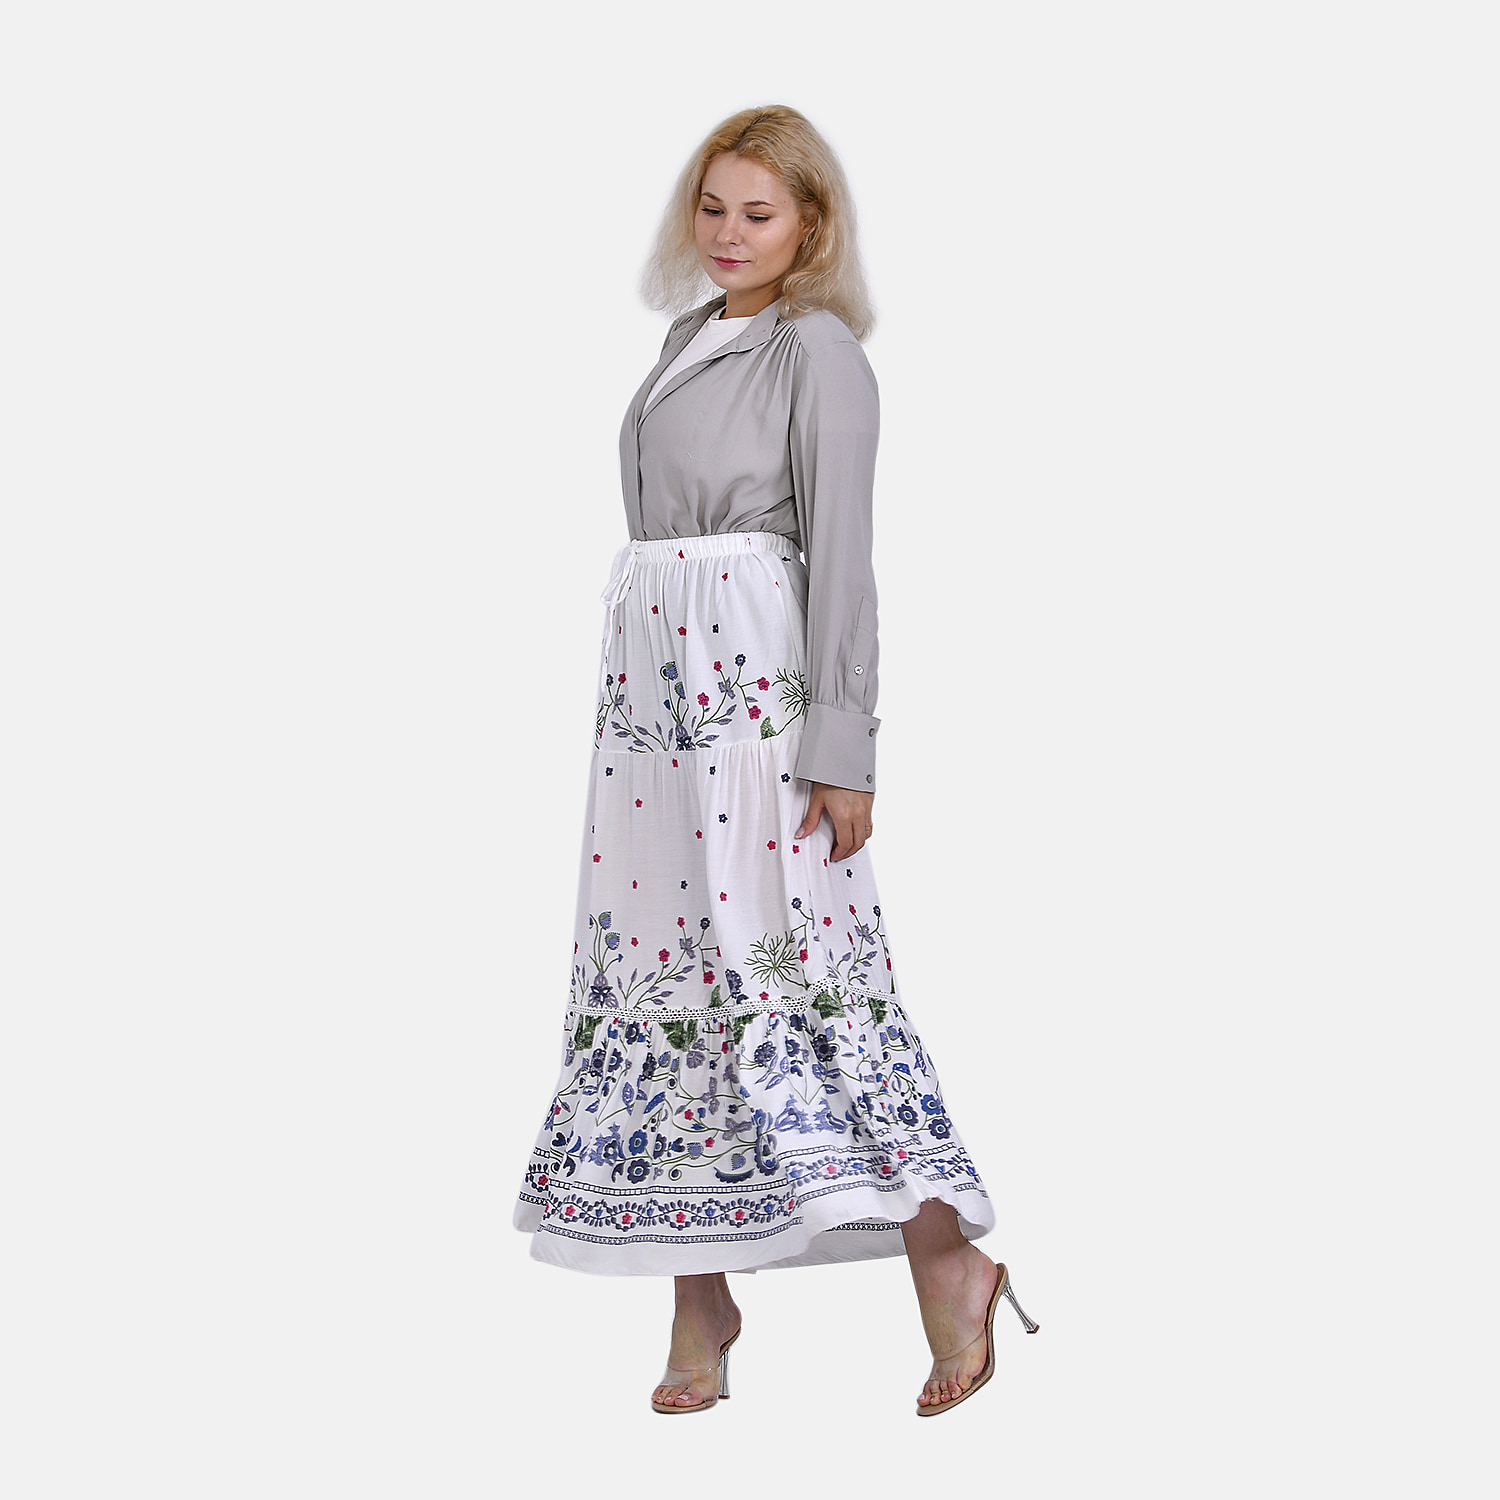 La Marey Viscose Floral Skirt (Size 90x1 cm) - White & Black